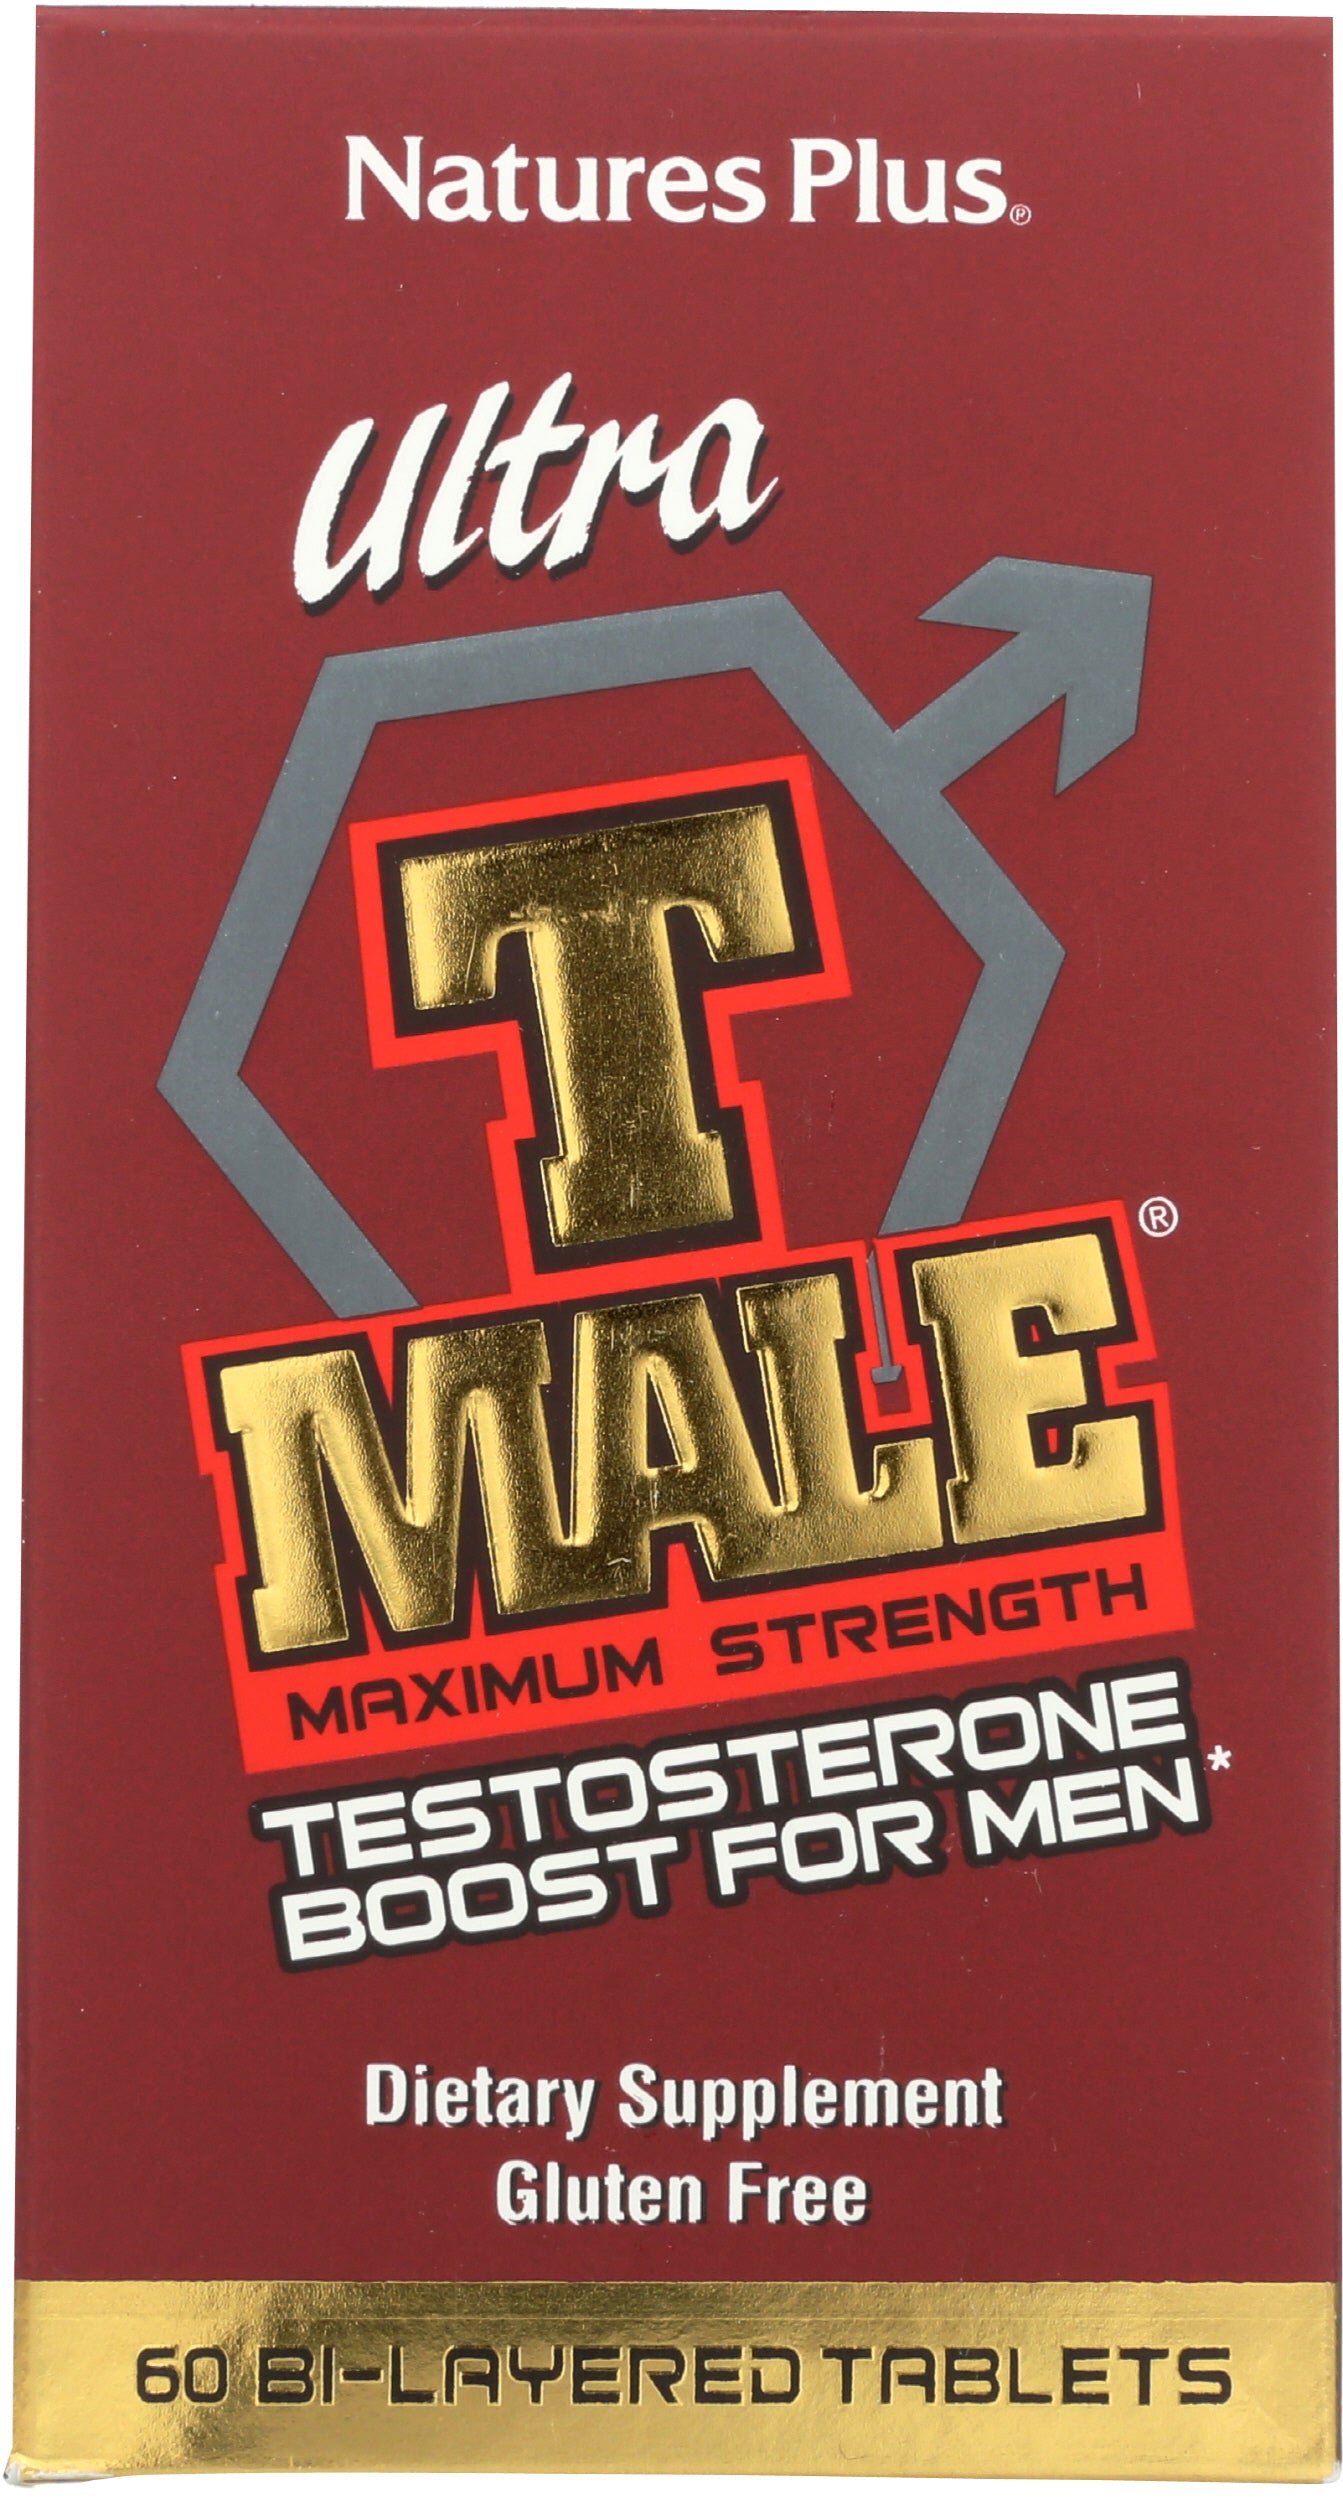 NaturesPlus Ultra T Male Testosterone 60 Bi-Layered Tablets Front of Bottle